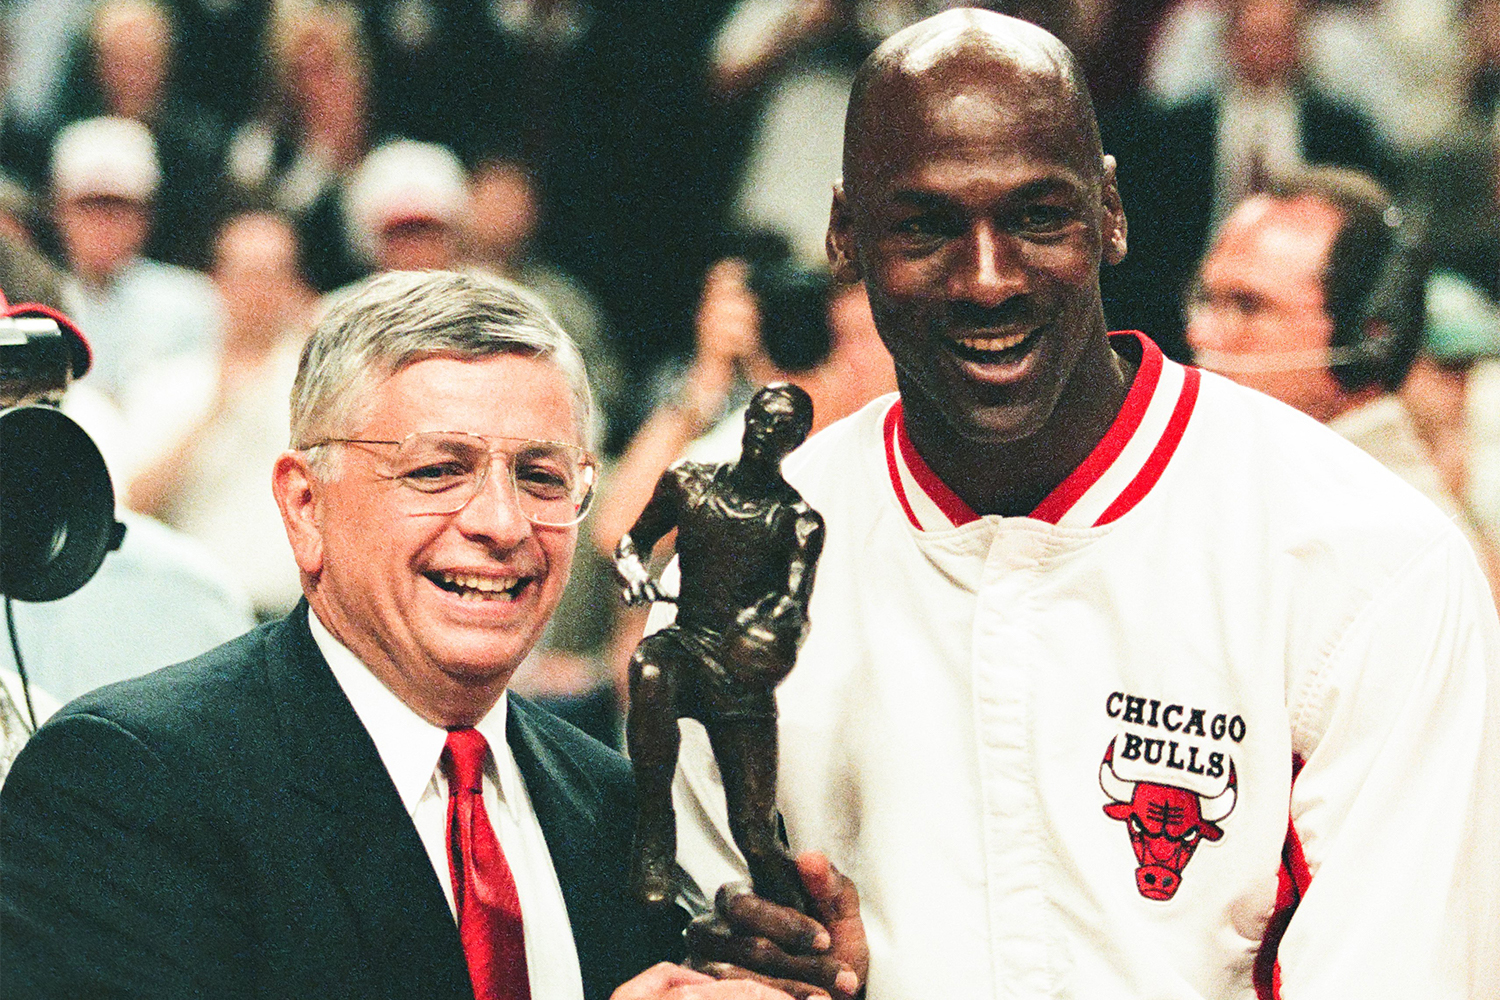 David Stern presenting Michael Jordan with the MVP award in '96